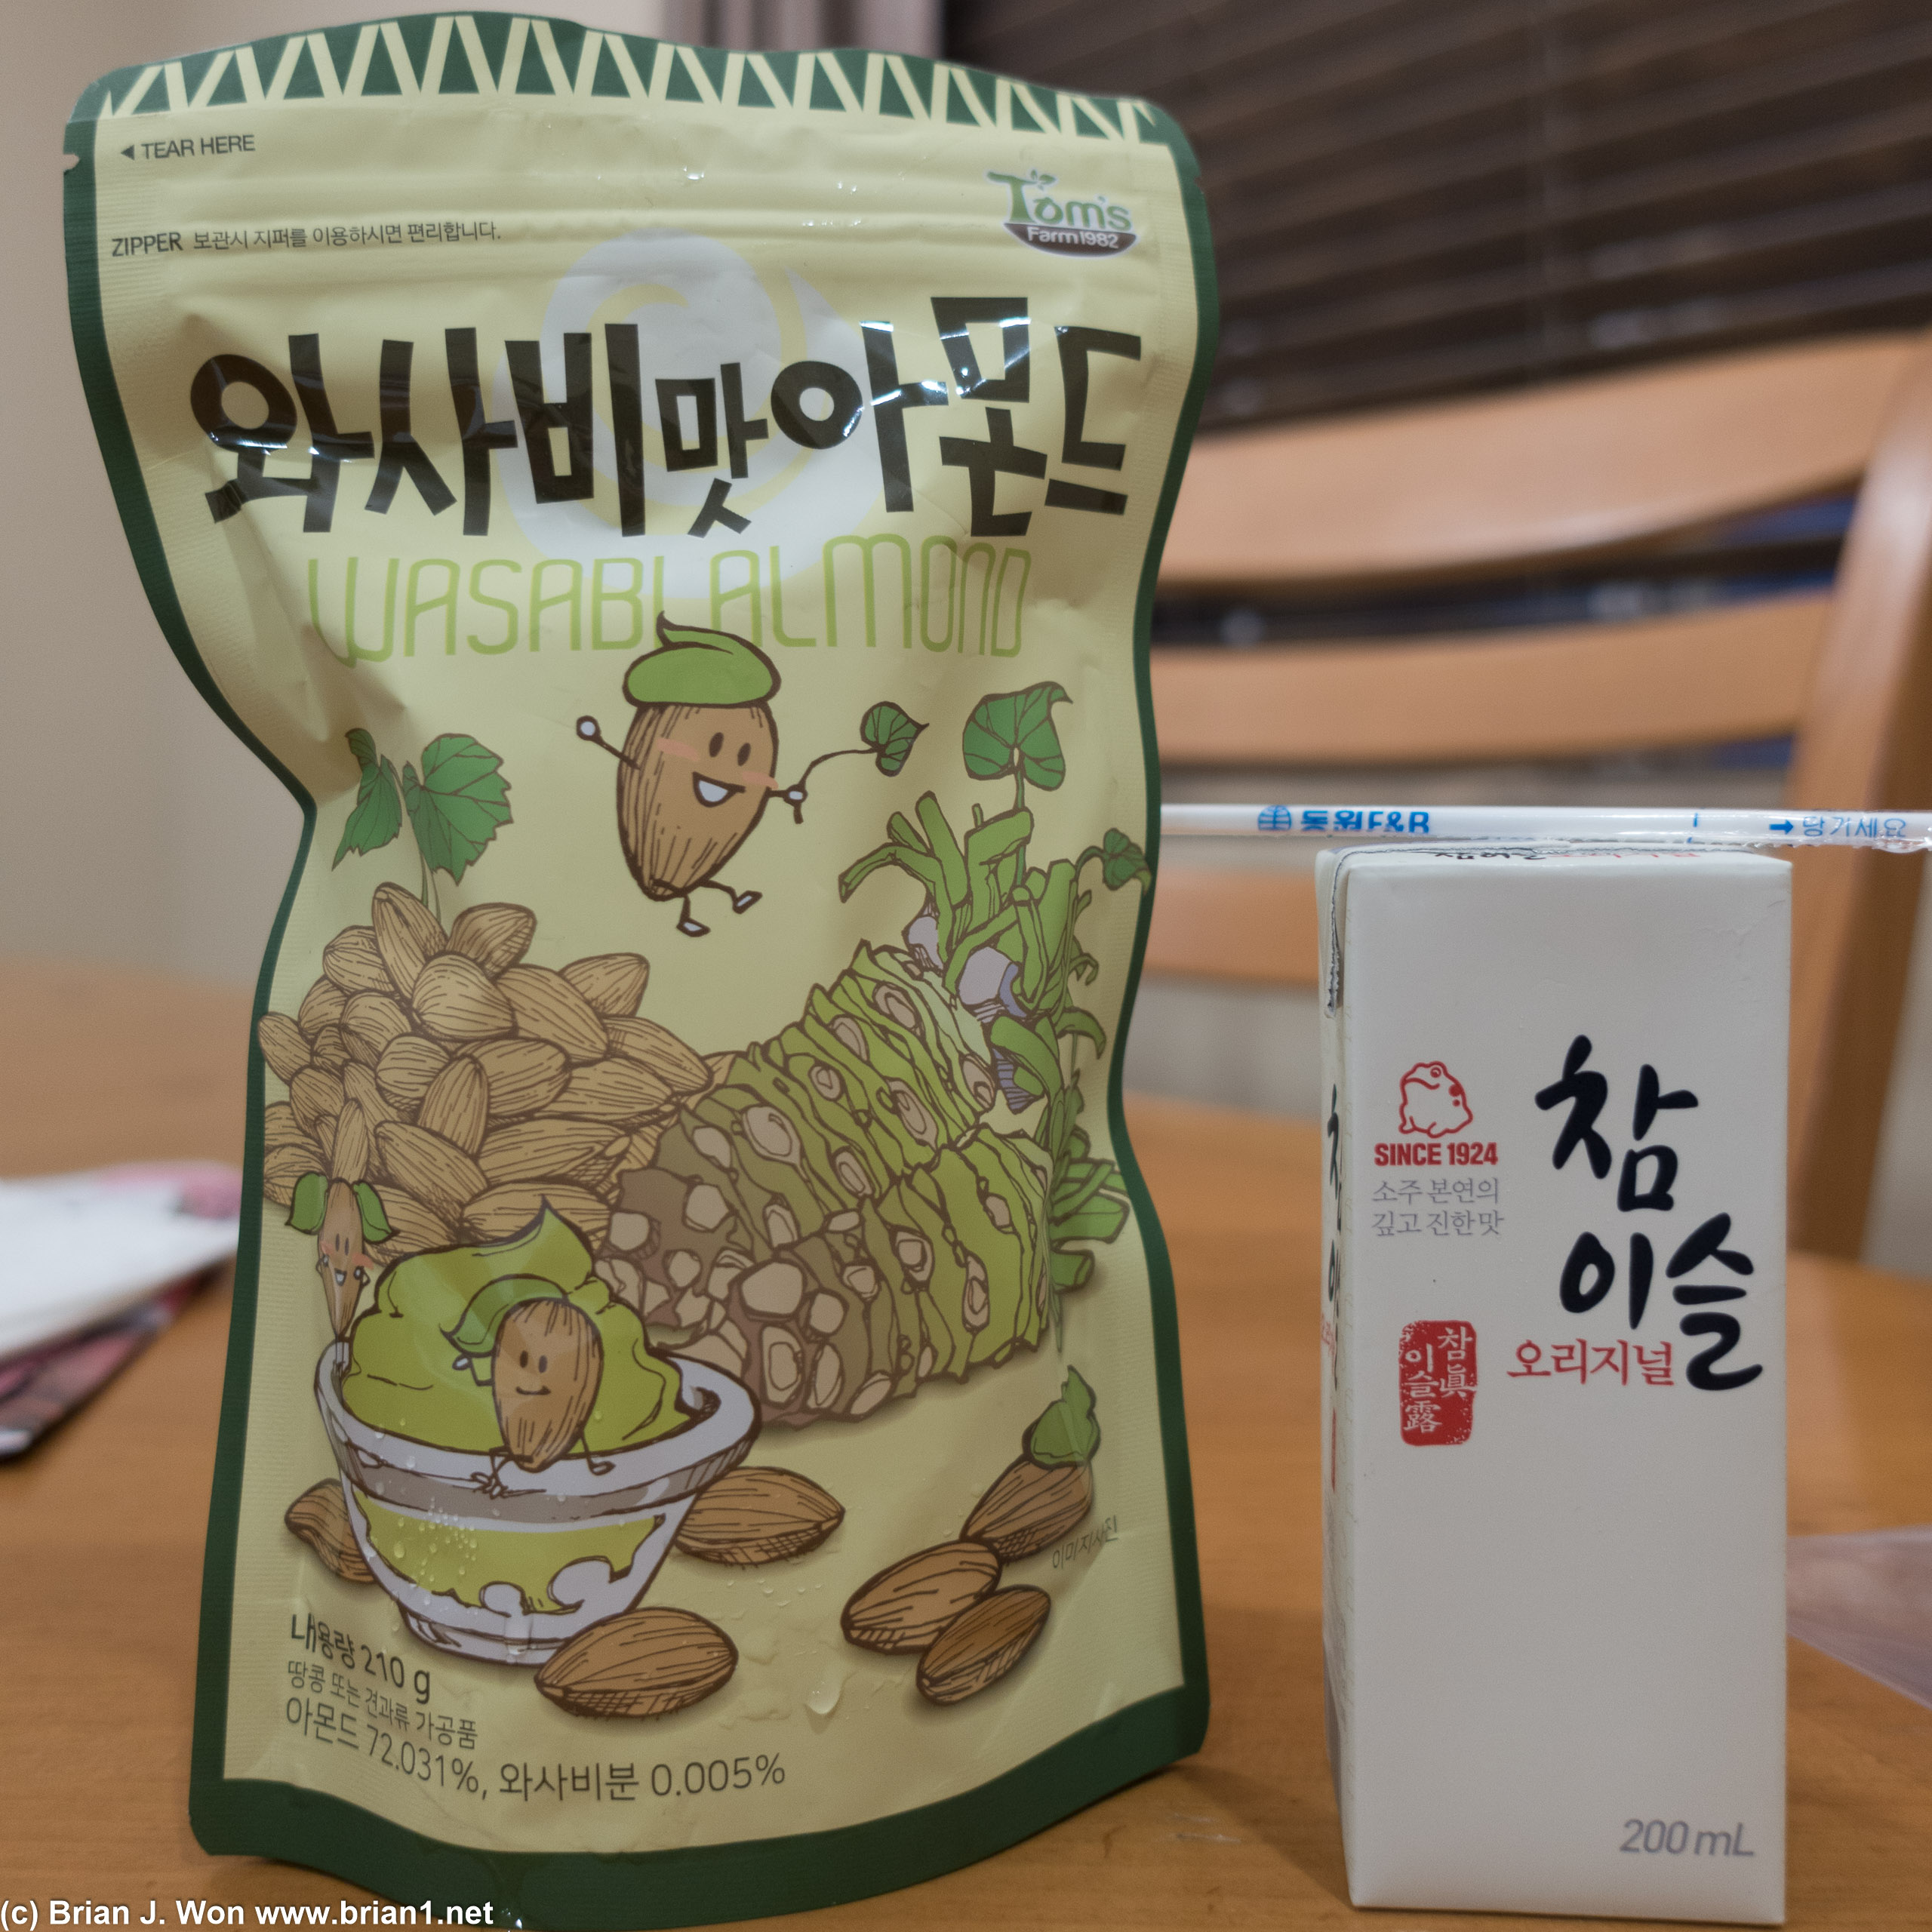 Wasabi almonds and soju in a box.